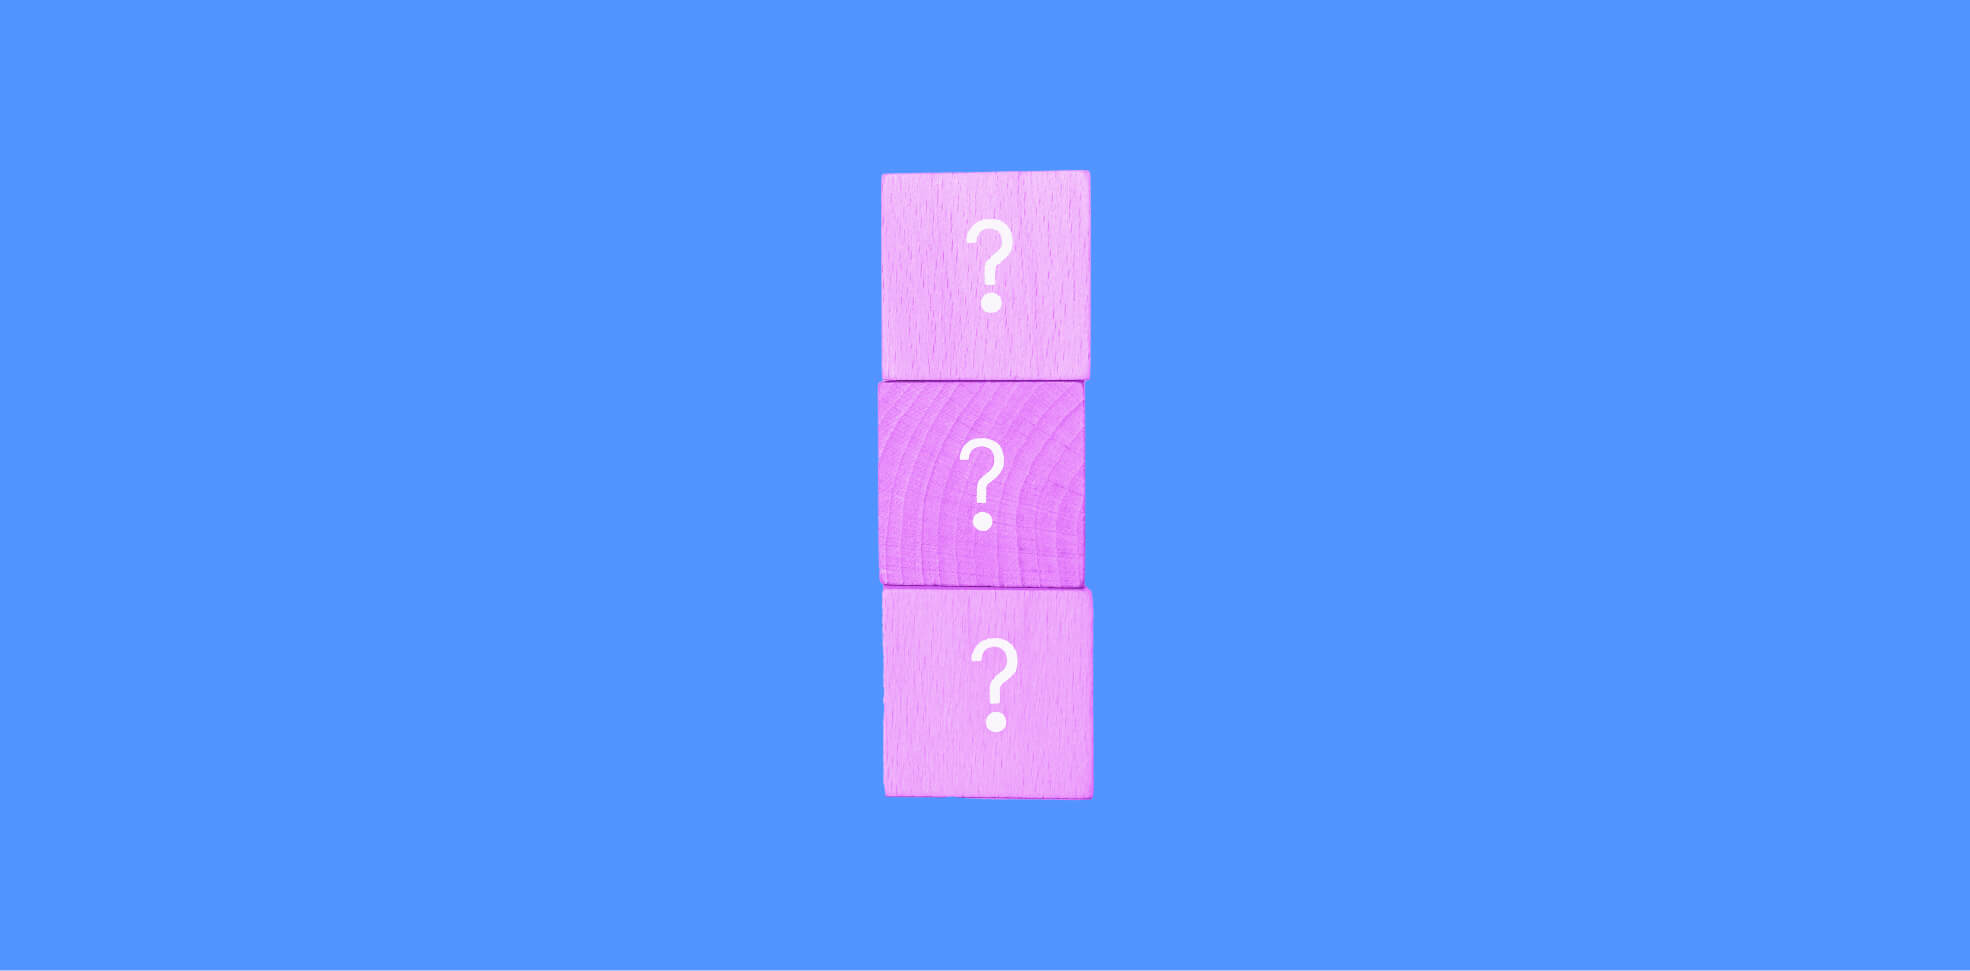 Tres cubos con signos de interrogación sobre un fondo azul.